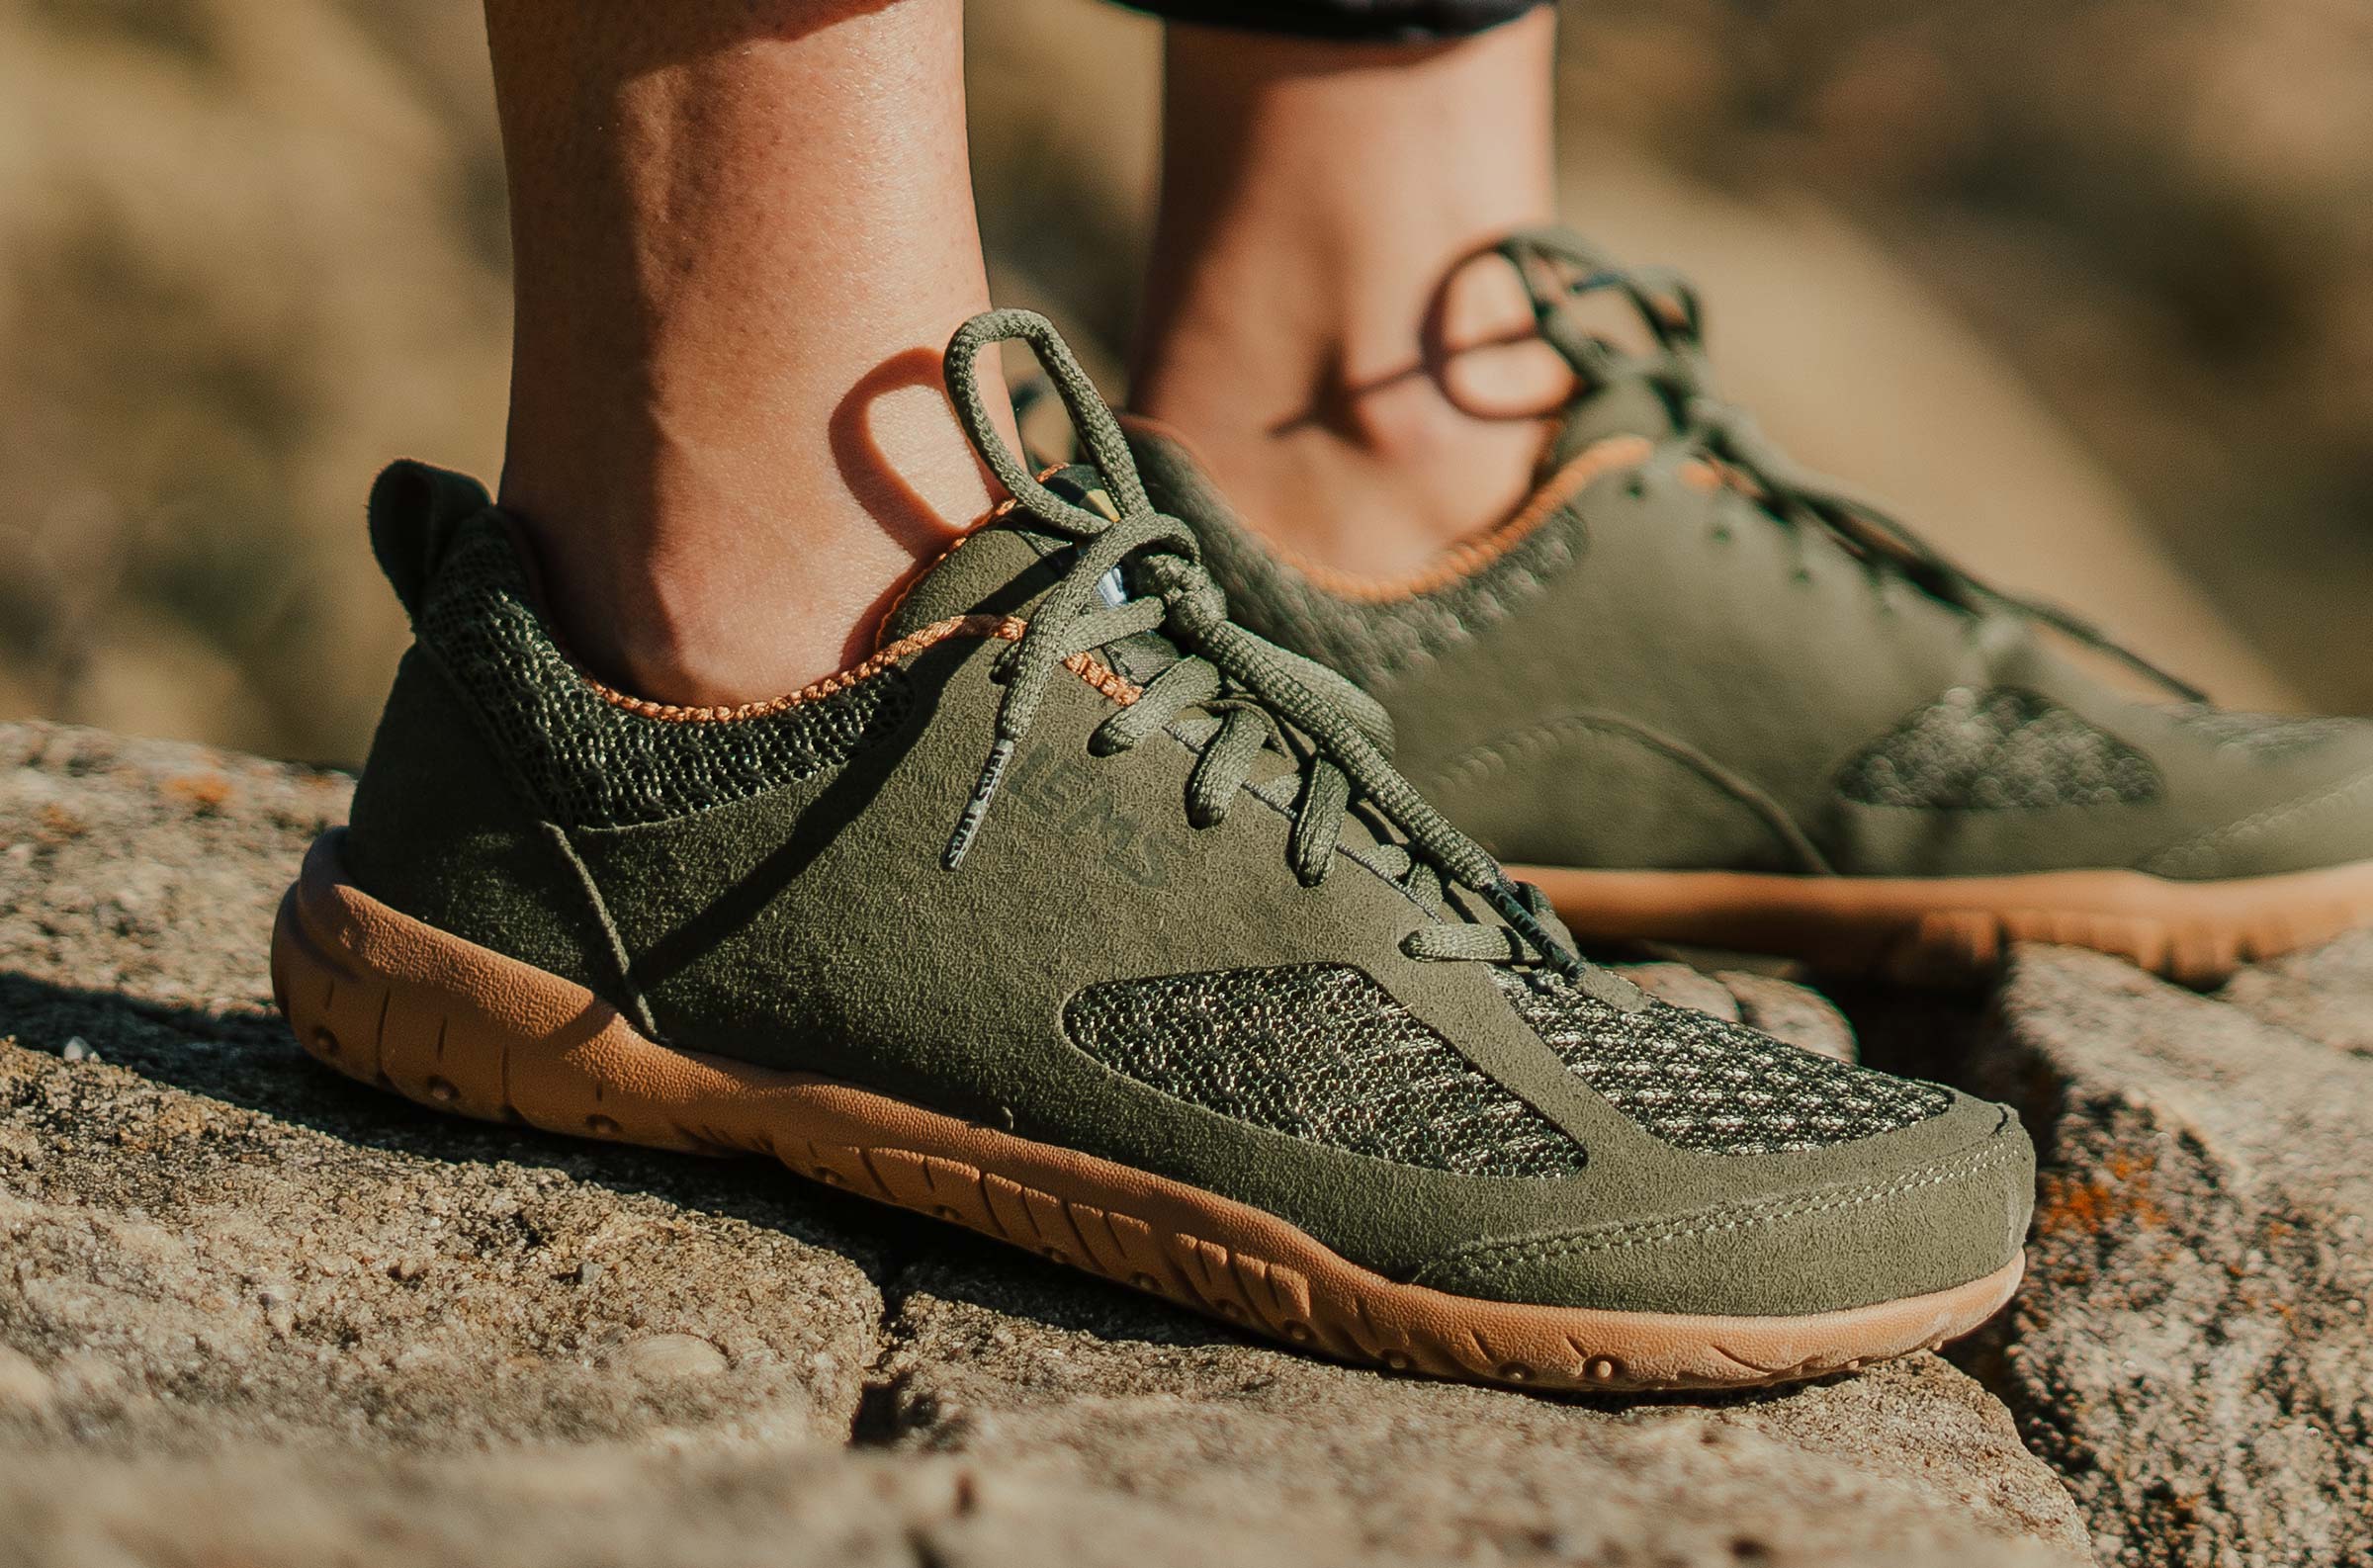 Lems Boulder Boot Leather Russet | Natural Footgear